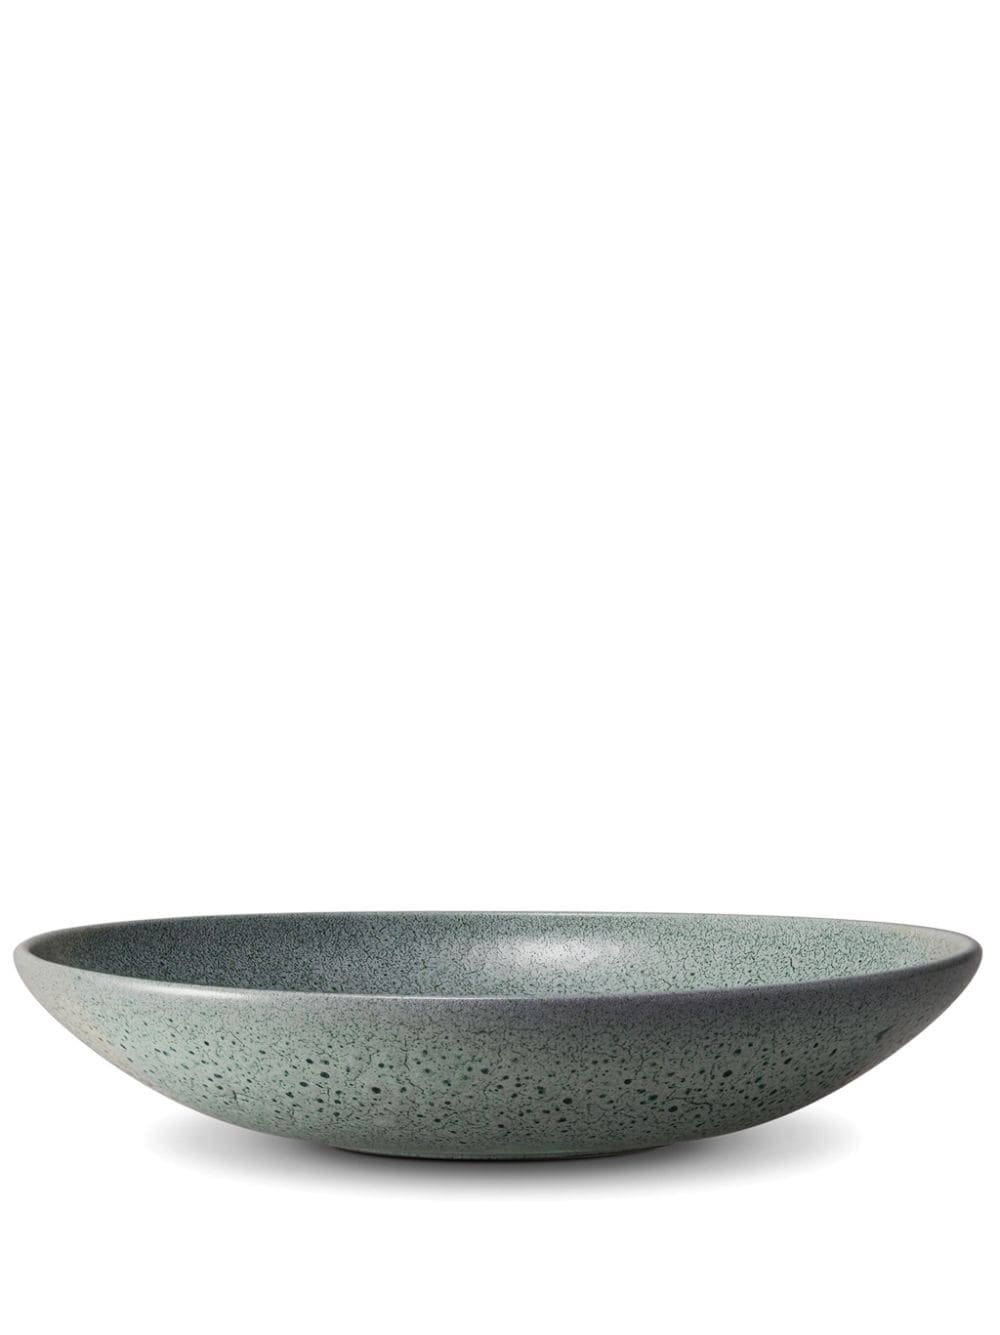 L'Objet Terra porcelain bowl (30cm) - Green von L'Objet